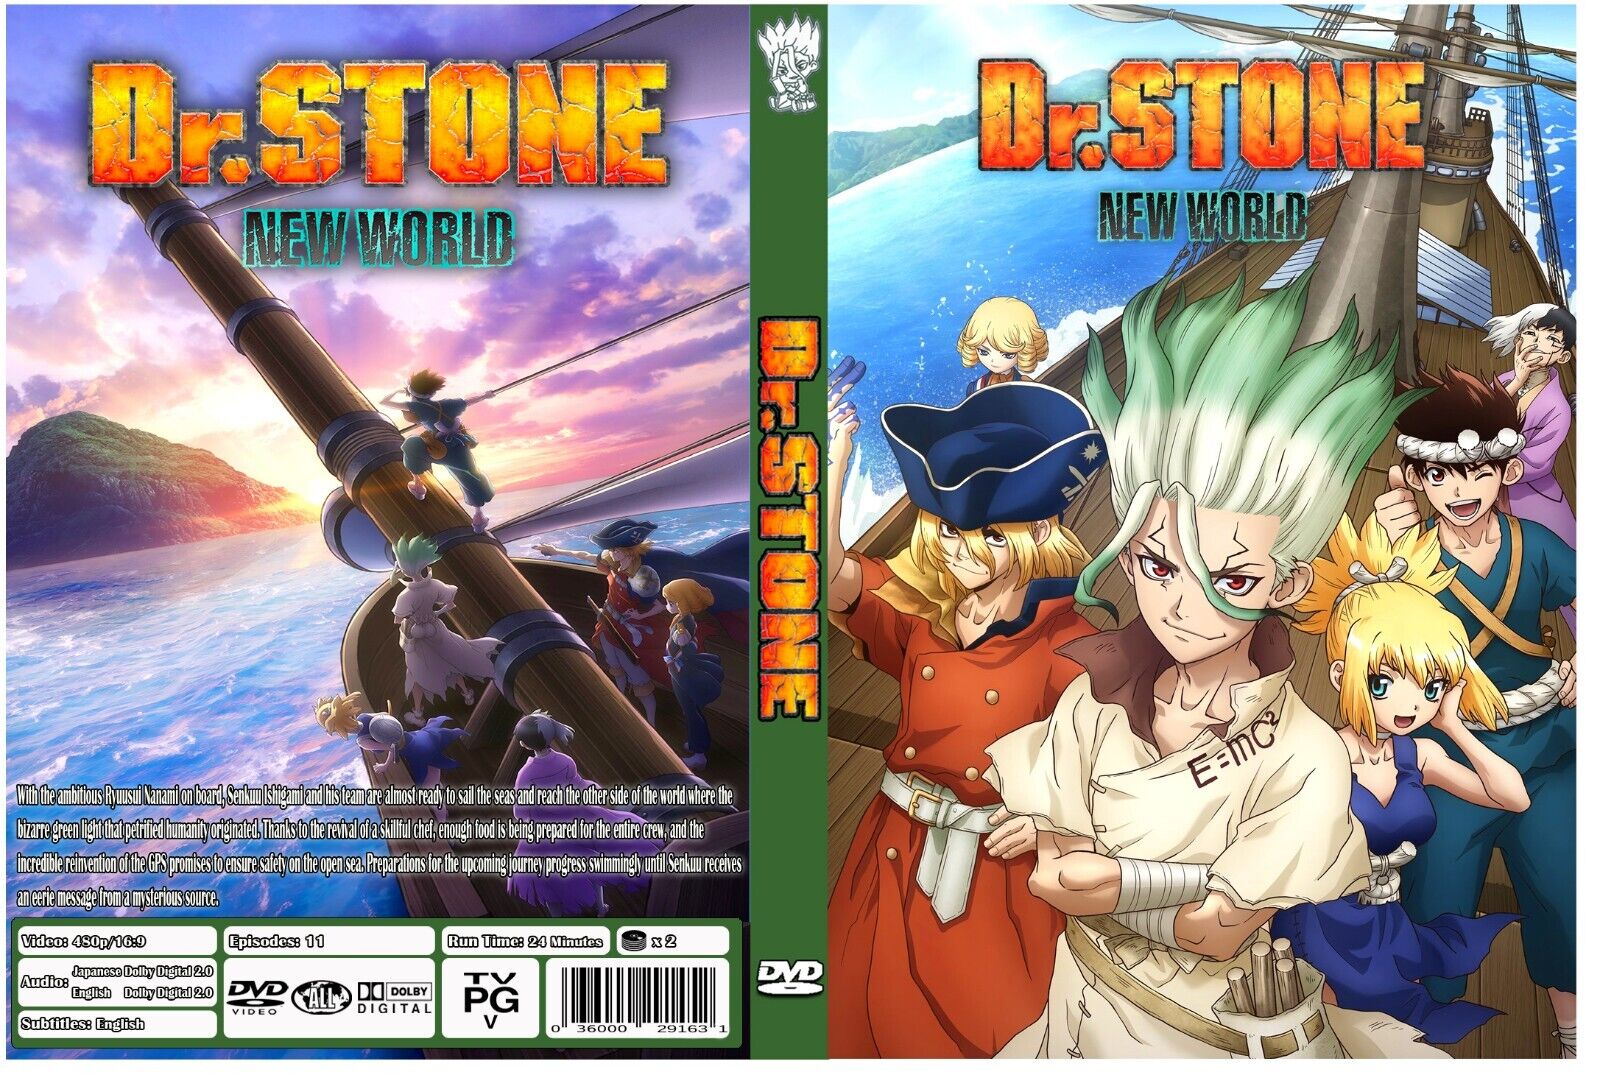 Dr Stone New World Season 3 Dual Audio English/Japanese with English Subs.